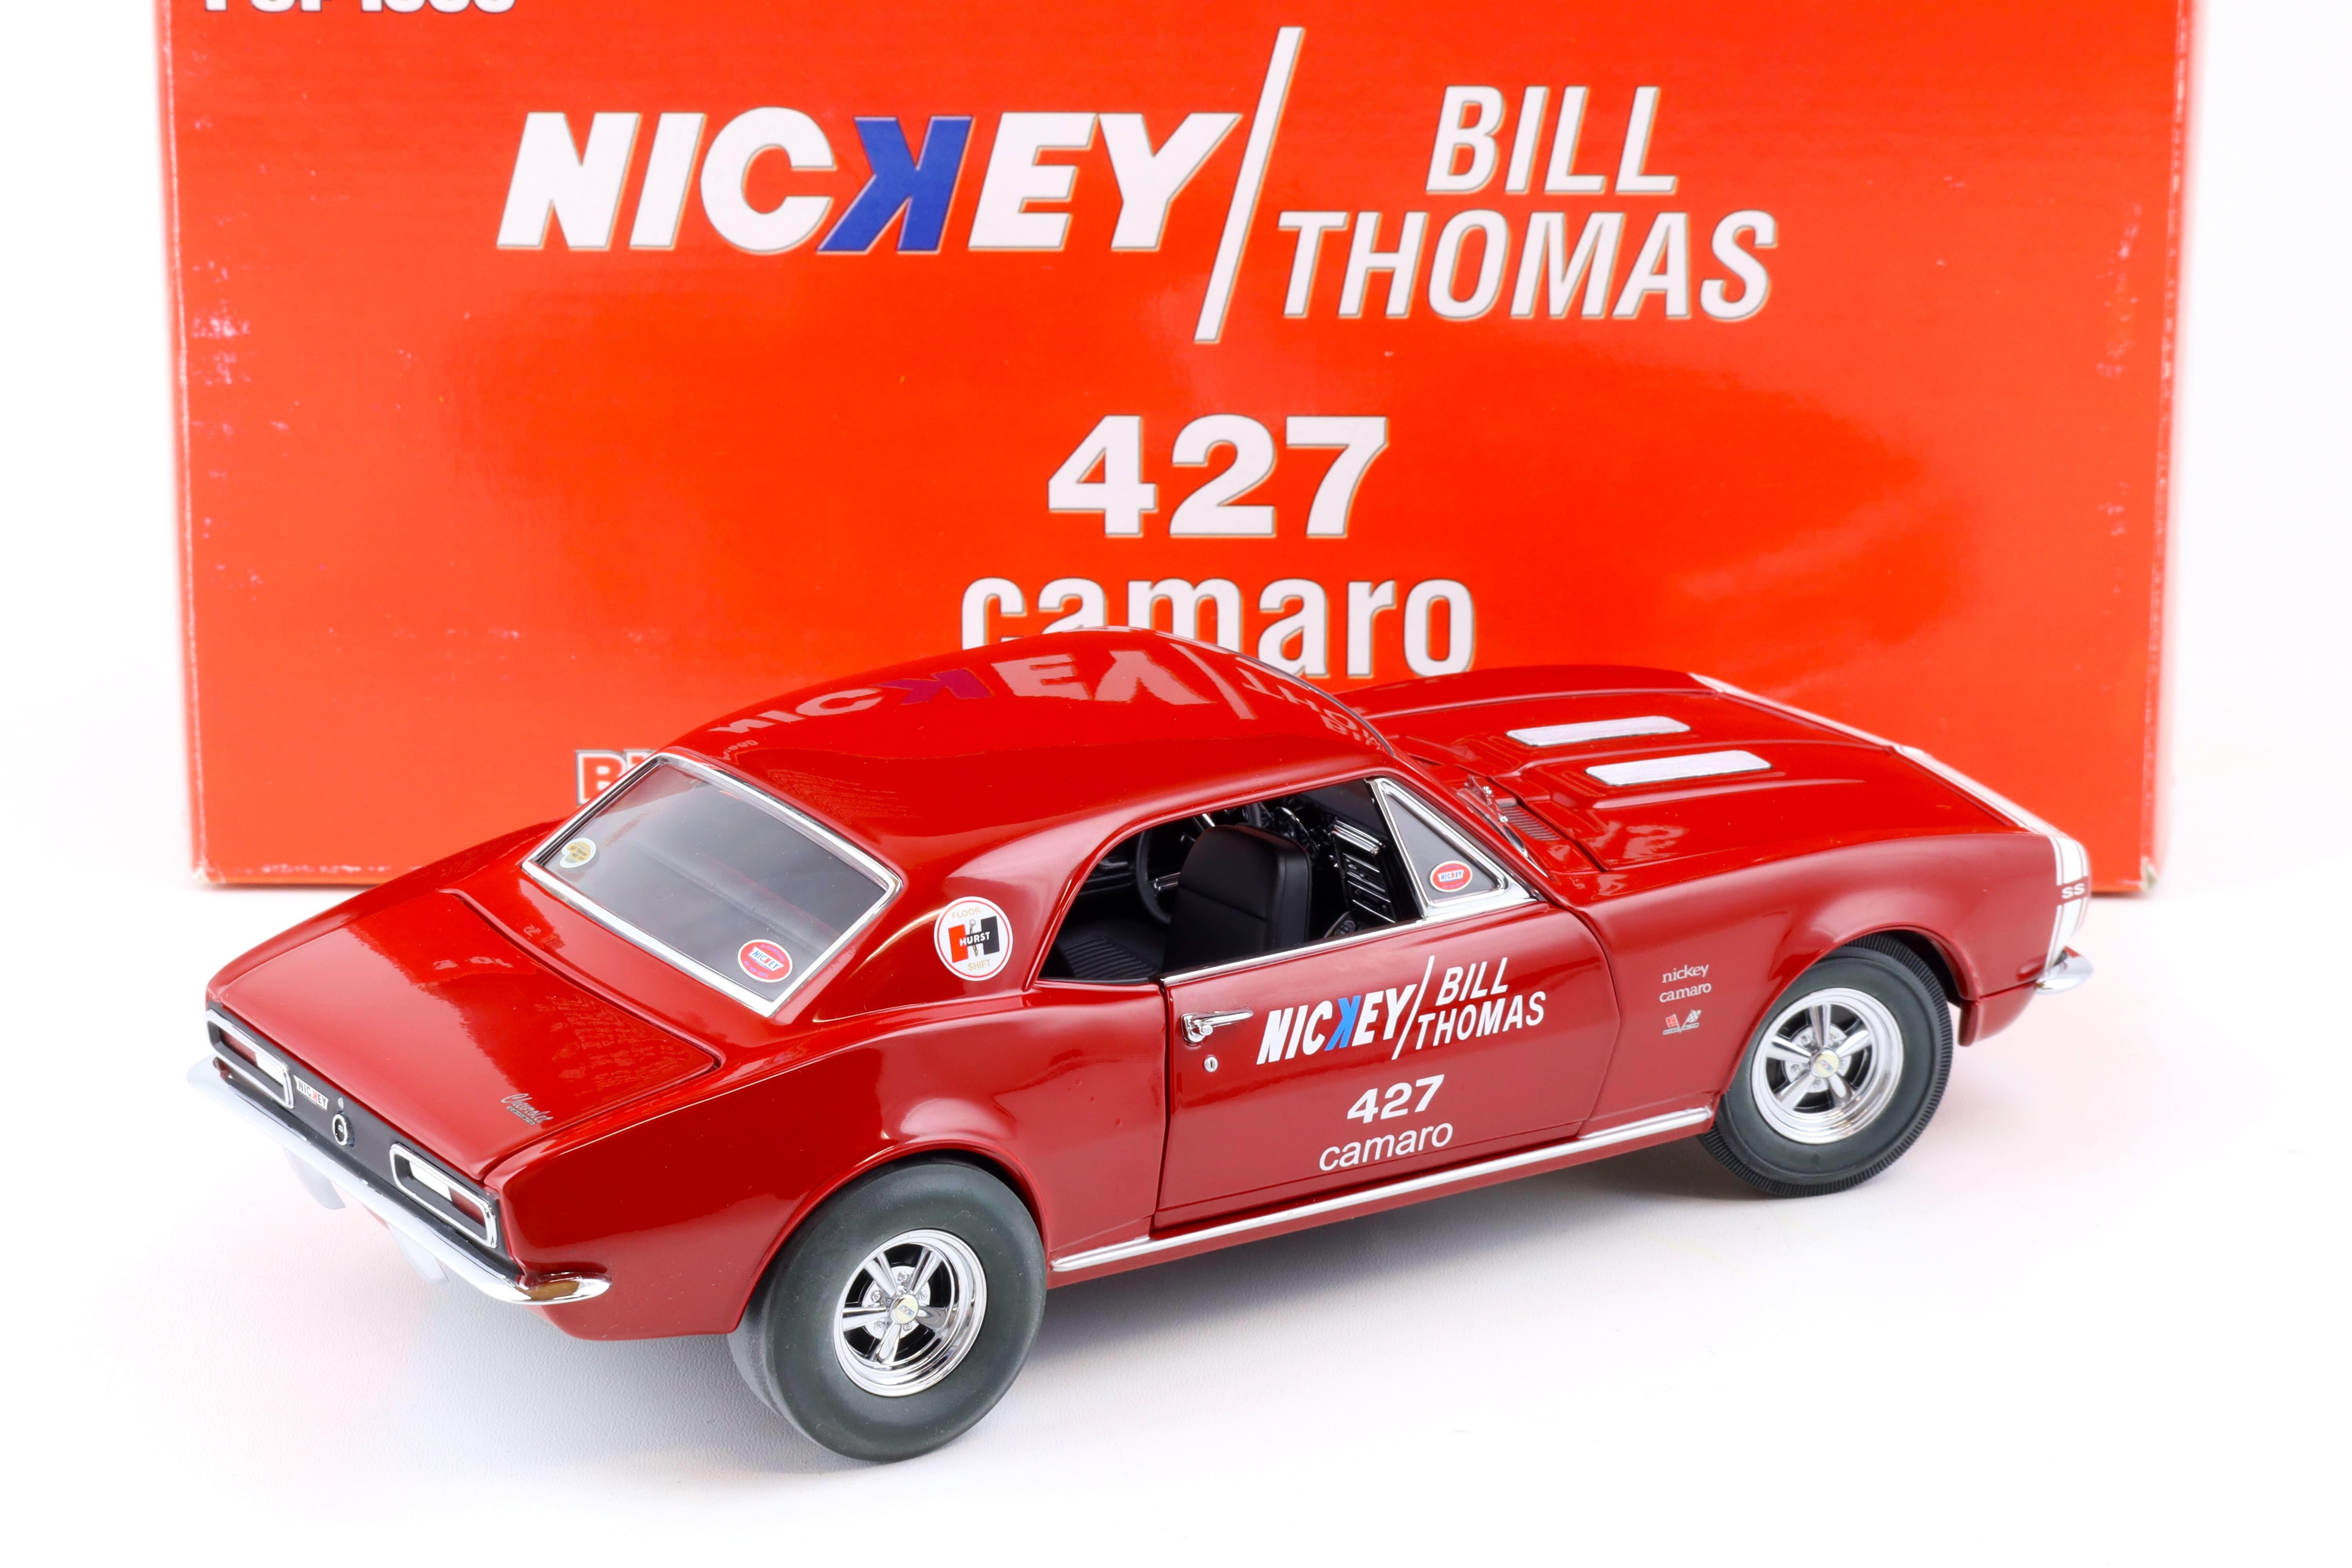 1:18 Exact Detail 1967 Chevrolet Camaro 427 Nickey Bill Thomas red WCC209D